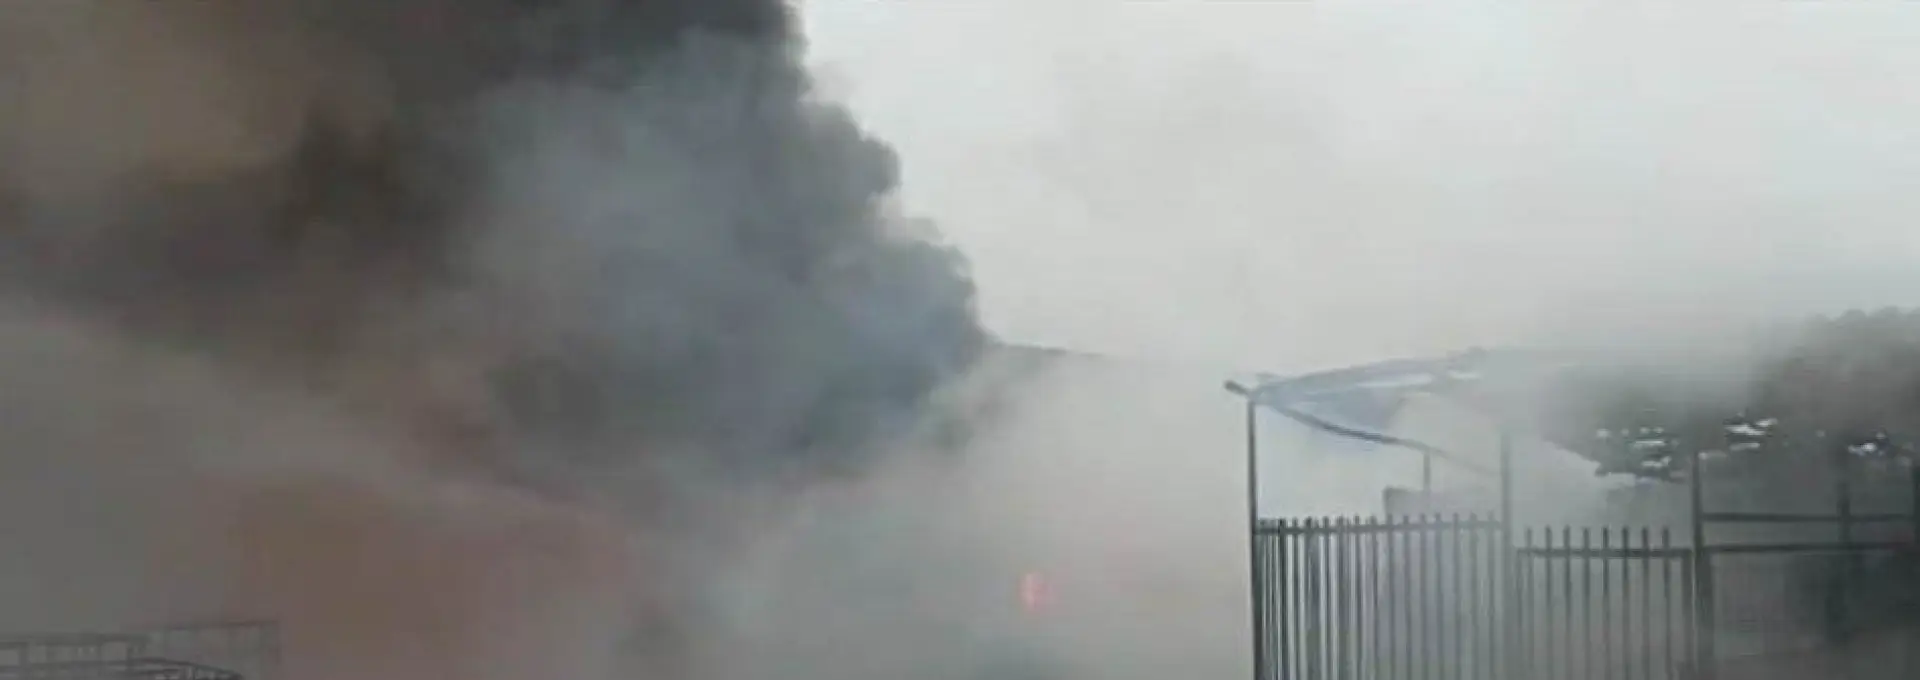 Foto VIDEO. Incendiu la o topitorie din Slatina